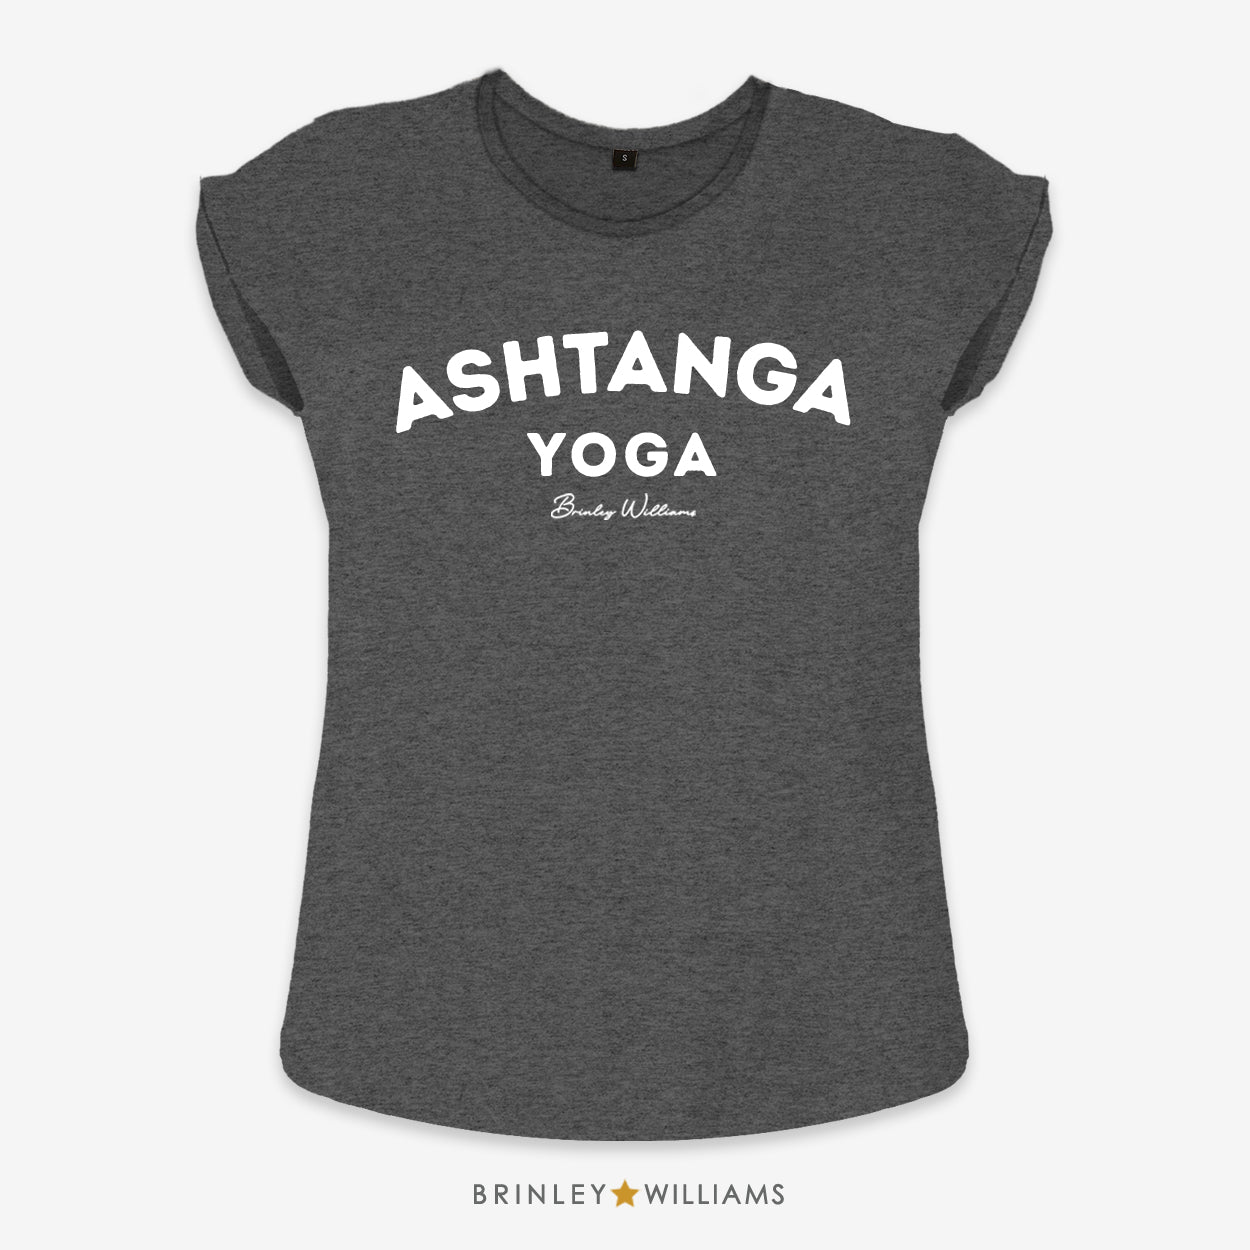 Ashtanga Yoga Rolled Sleeve T-shirt - Charcoal